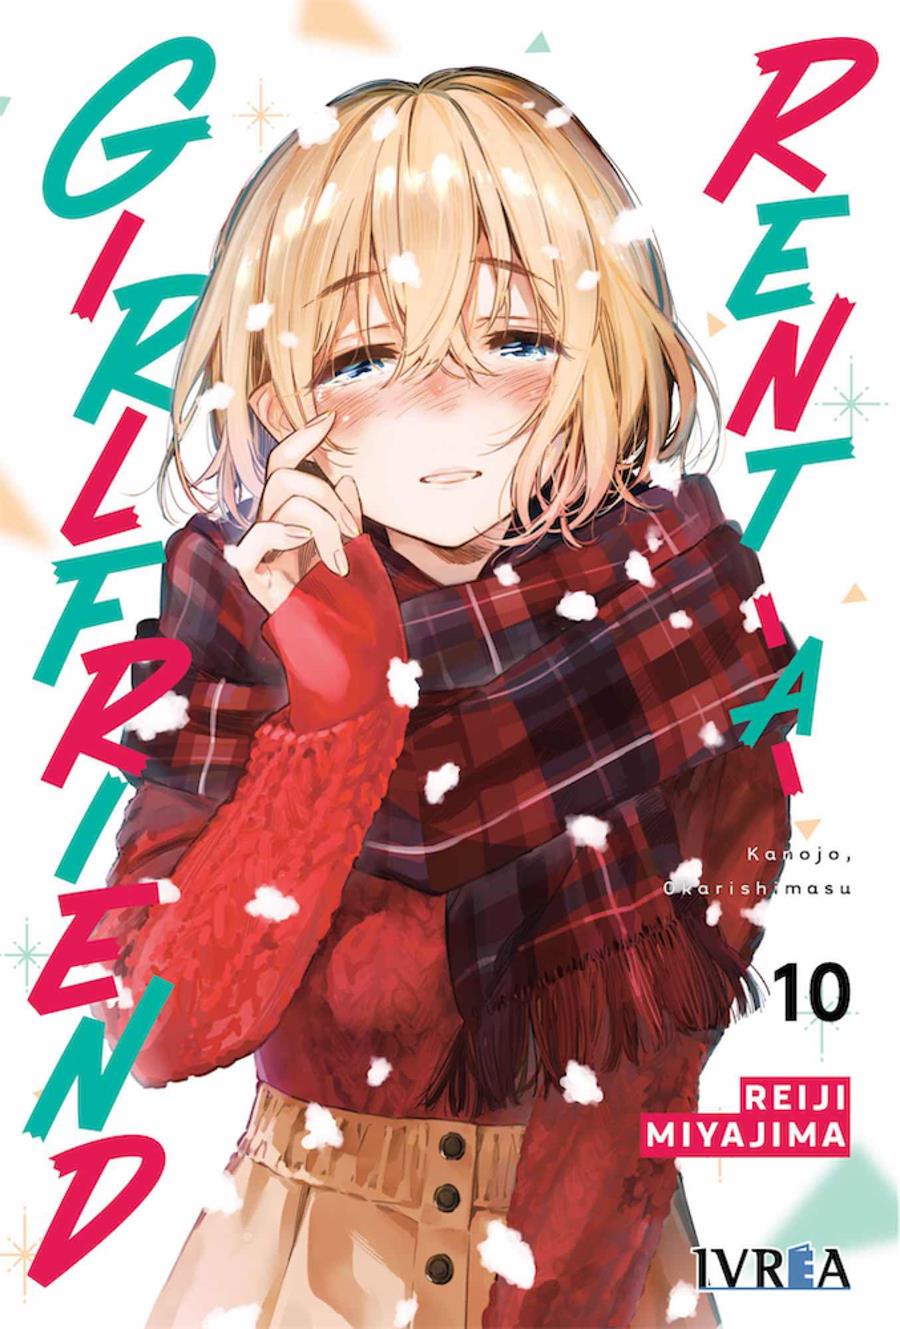 Rent-a-girlfriend 10 | N0222-IVR10 | Reiji Miyajima | Terra de Còmic - Tu tienda de cómics online especializada en cómics, manga y merchandising